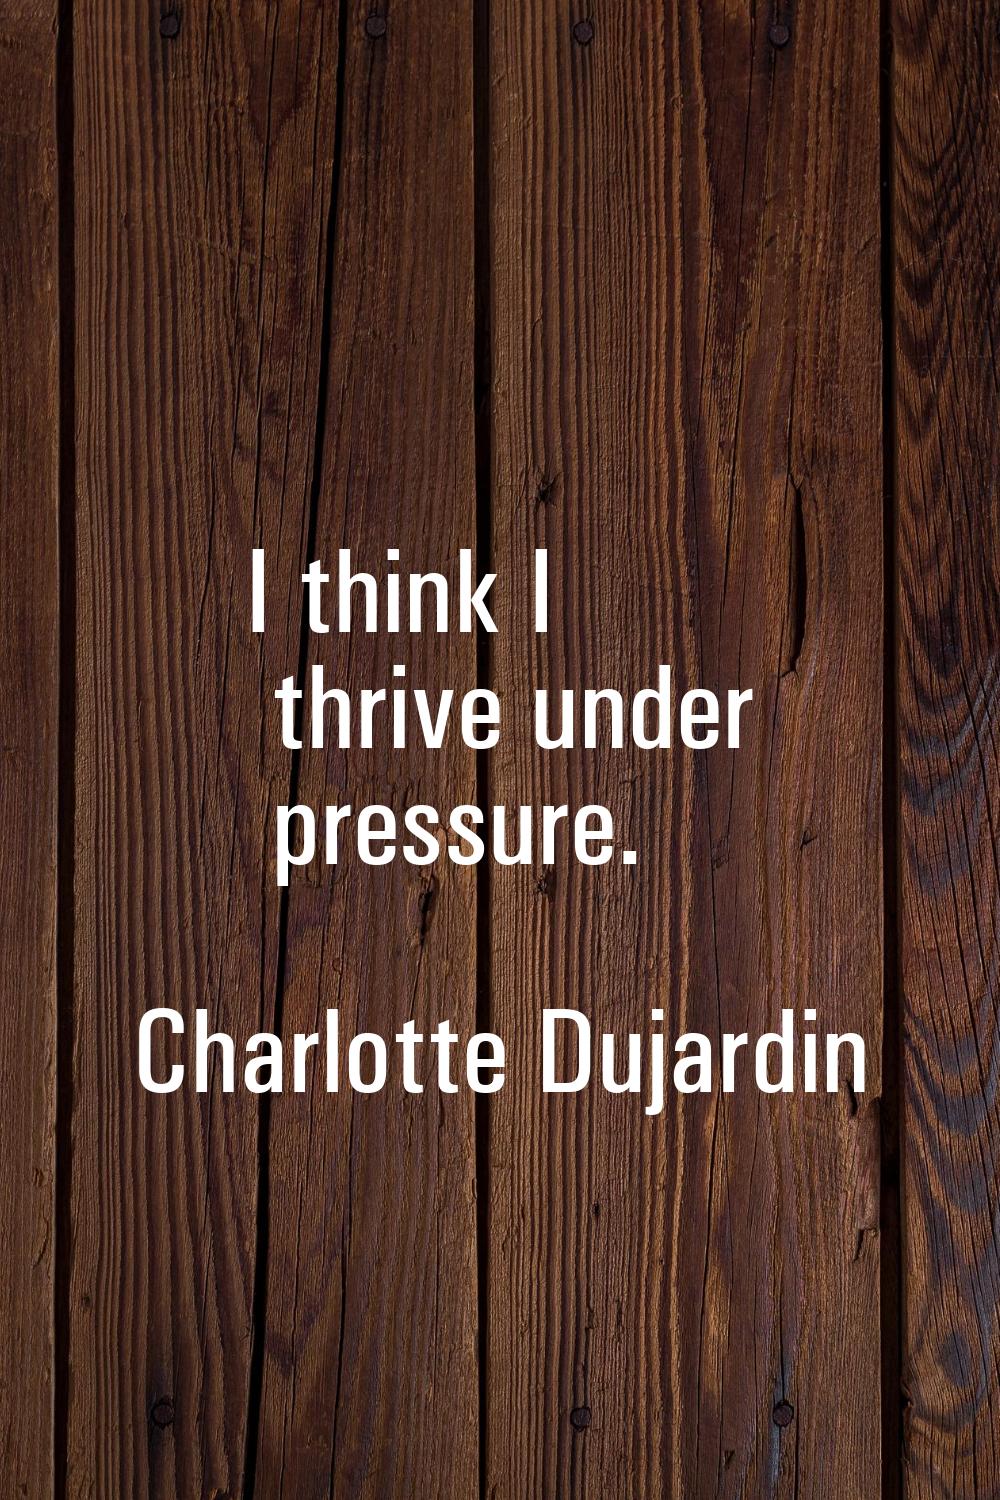 I think I thrive under pressure.